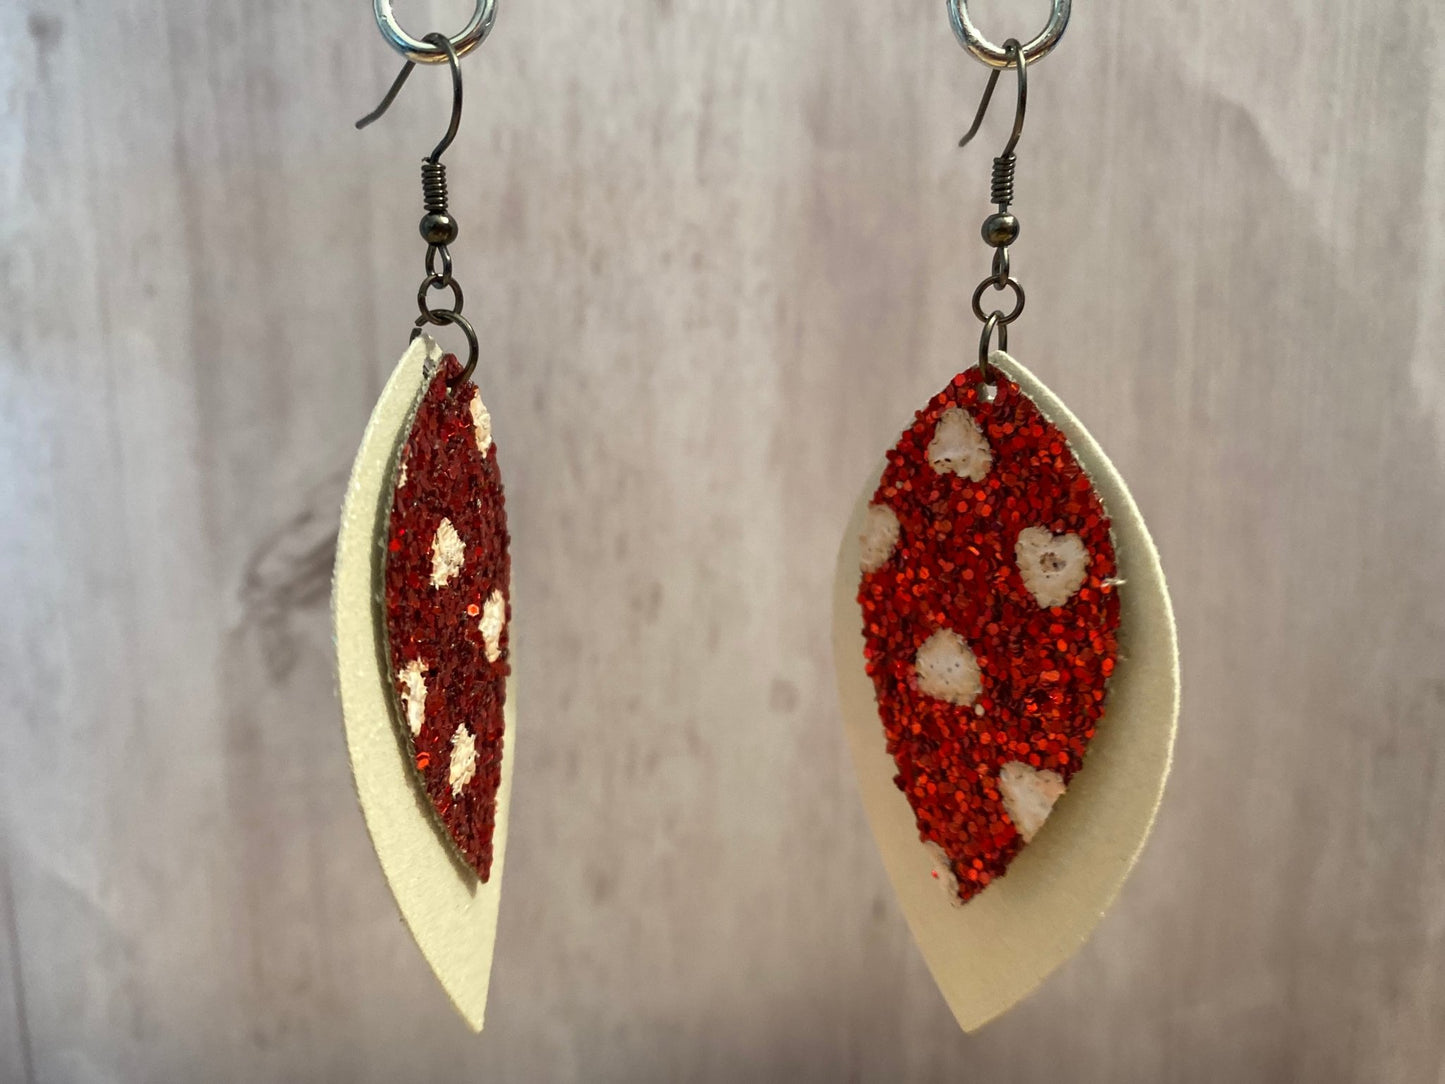 White and red heart teardrop earrings - Merlscreations